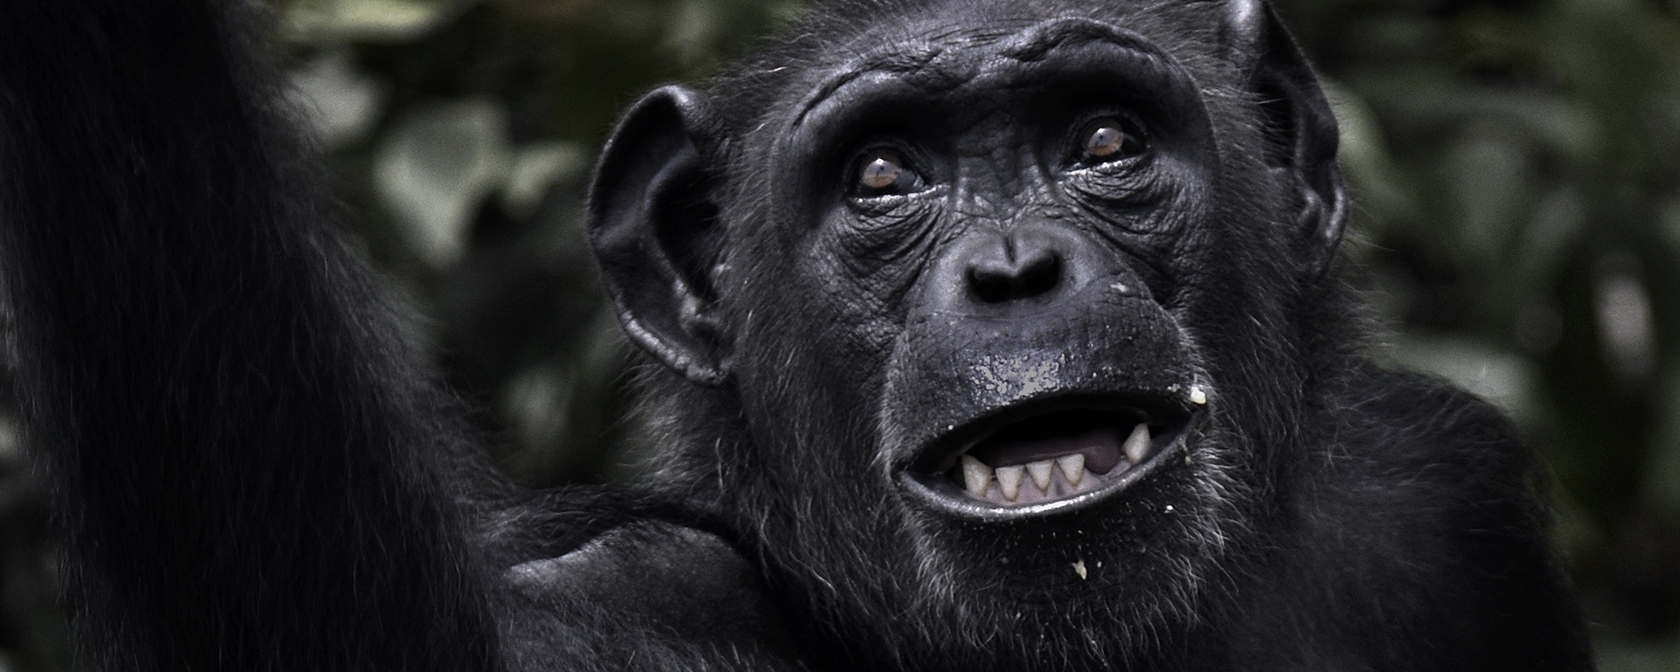 Chimps await sanctuary, while NIH still refuses to move them despite judge’s ruling